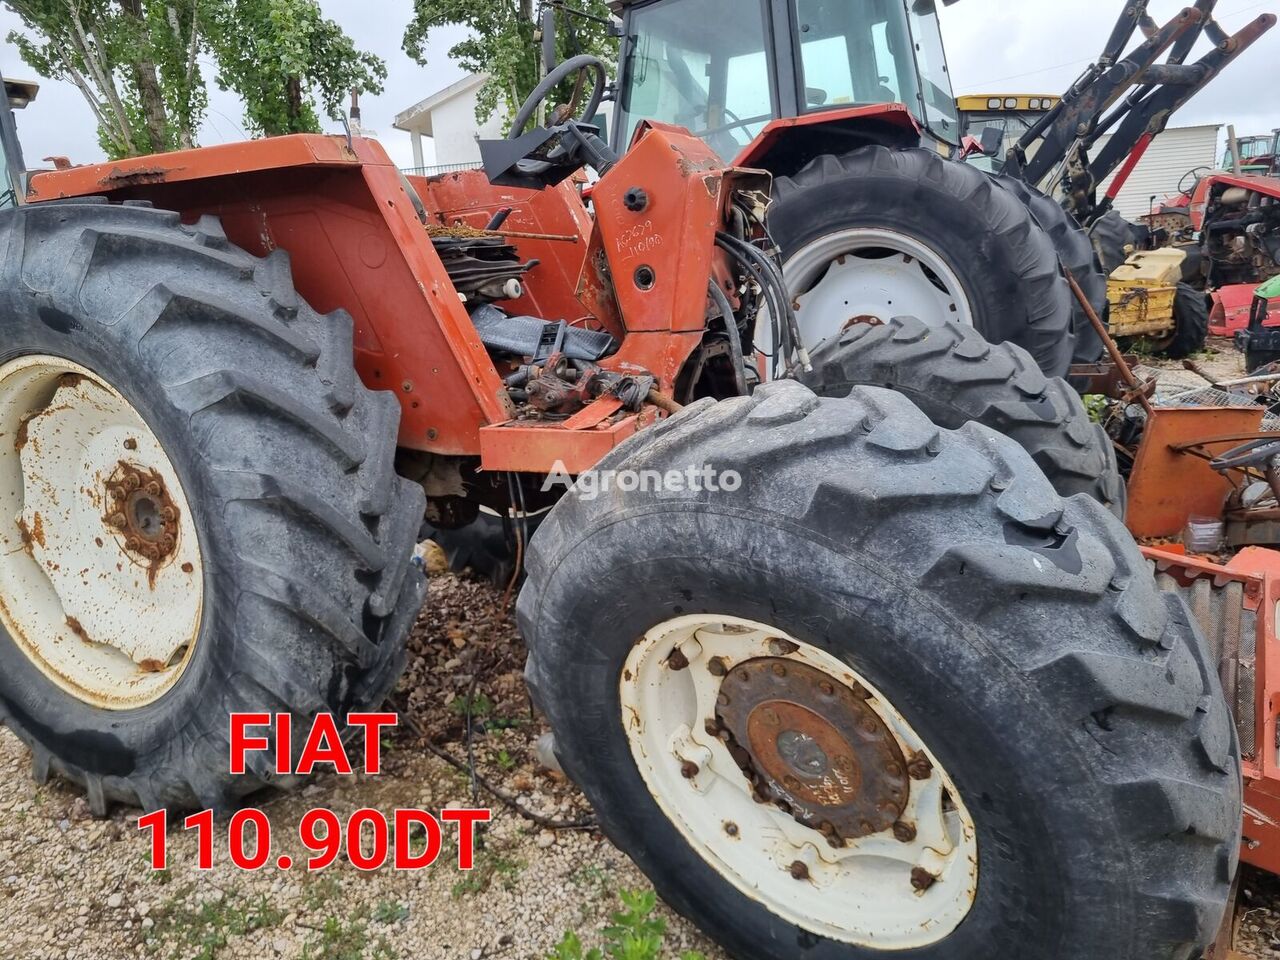 FIAT 110-90DT para peças wielen trekker voor onderdelen